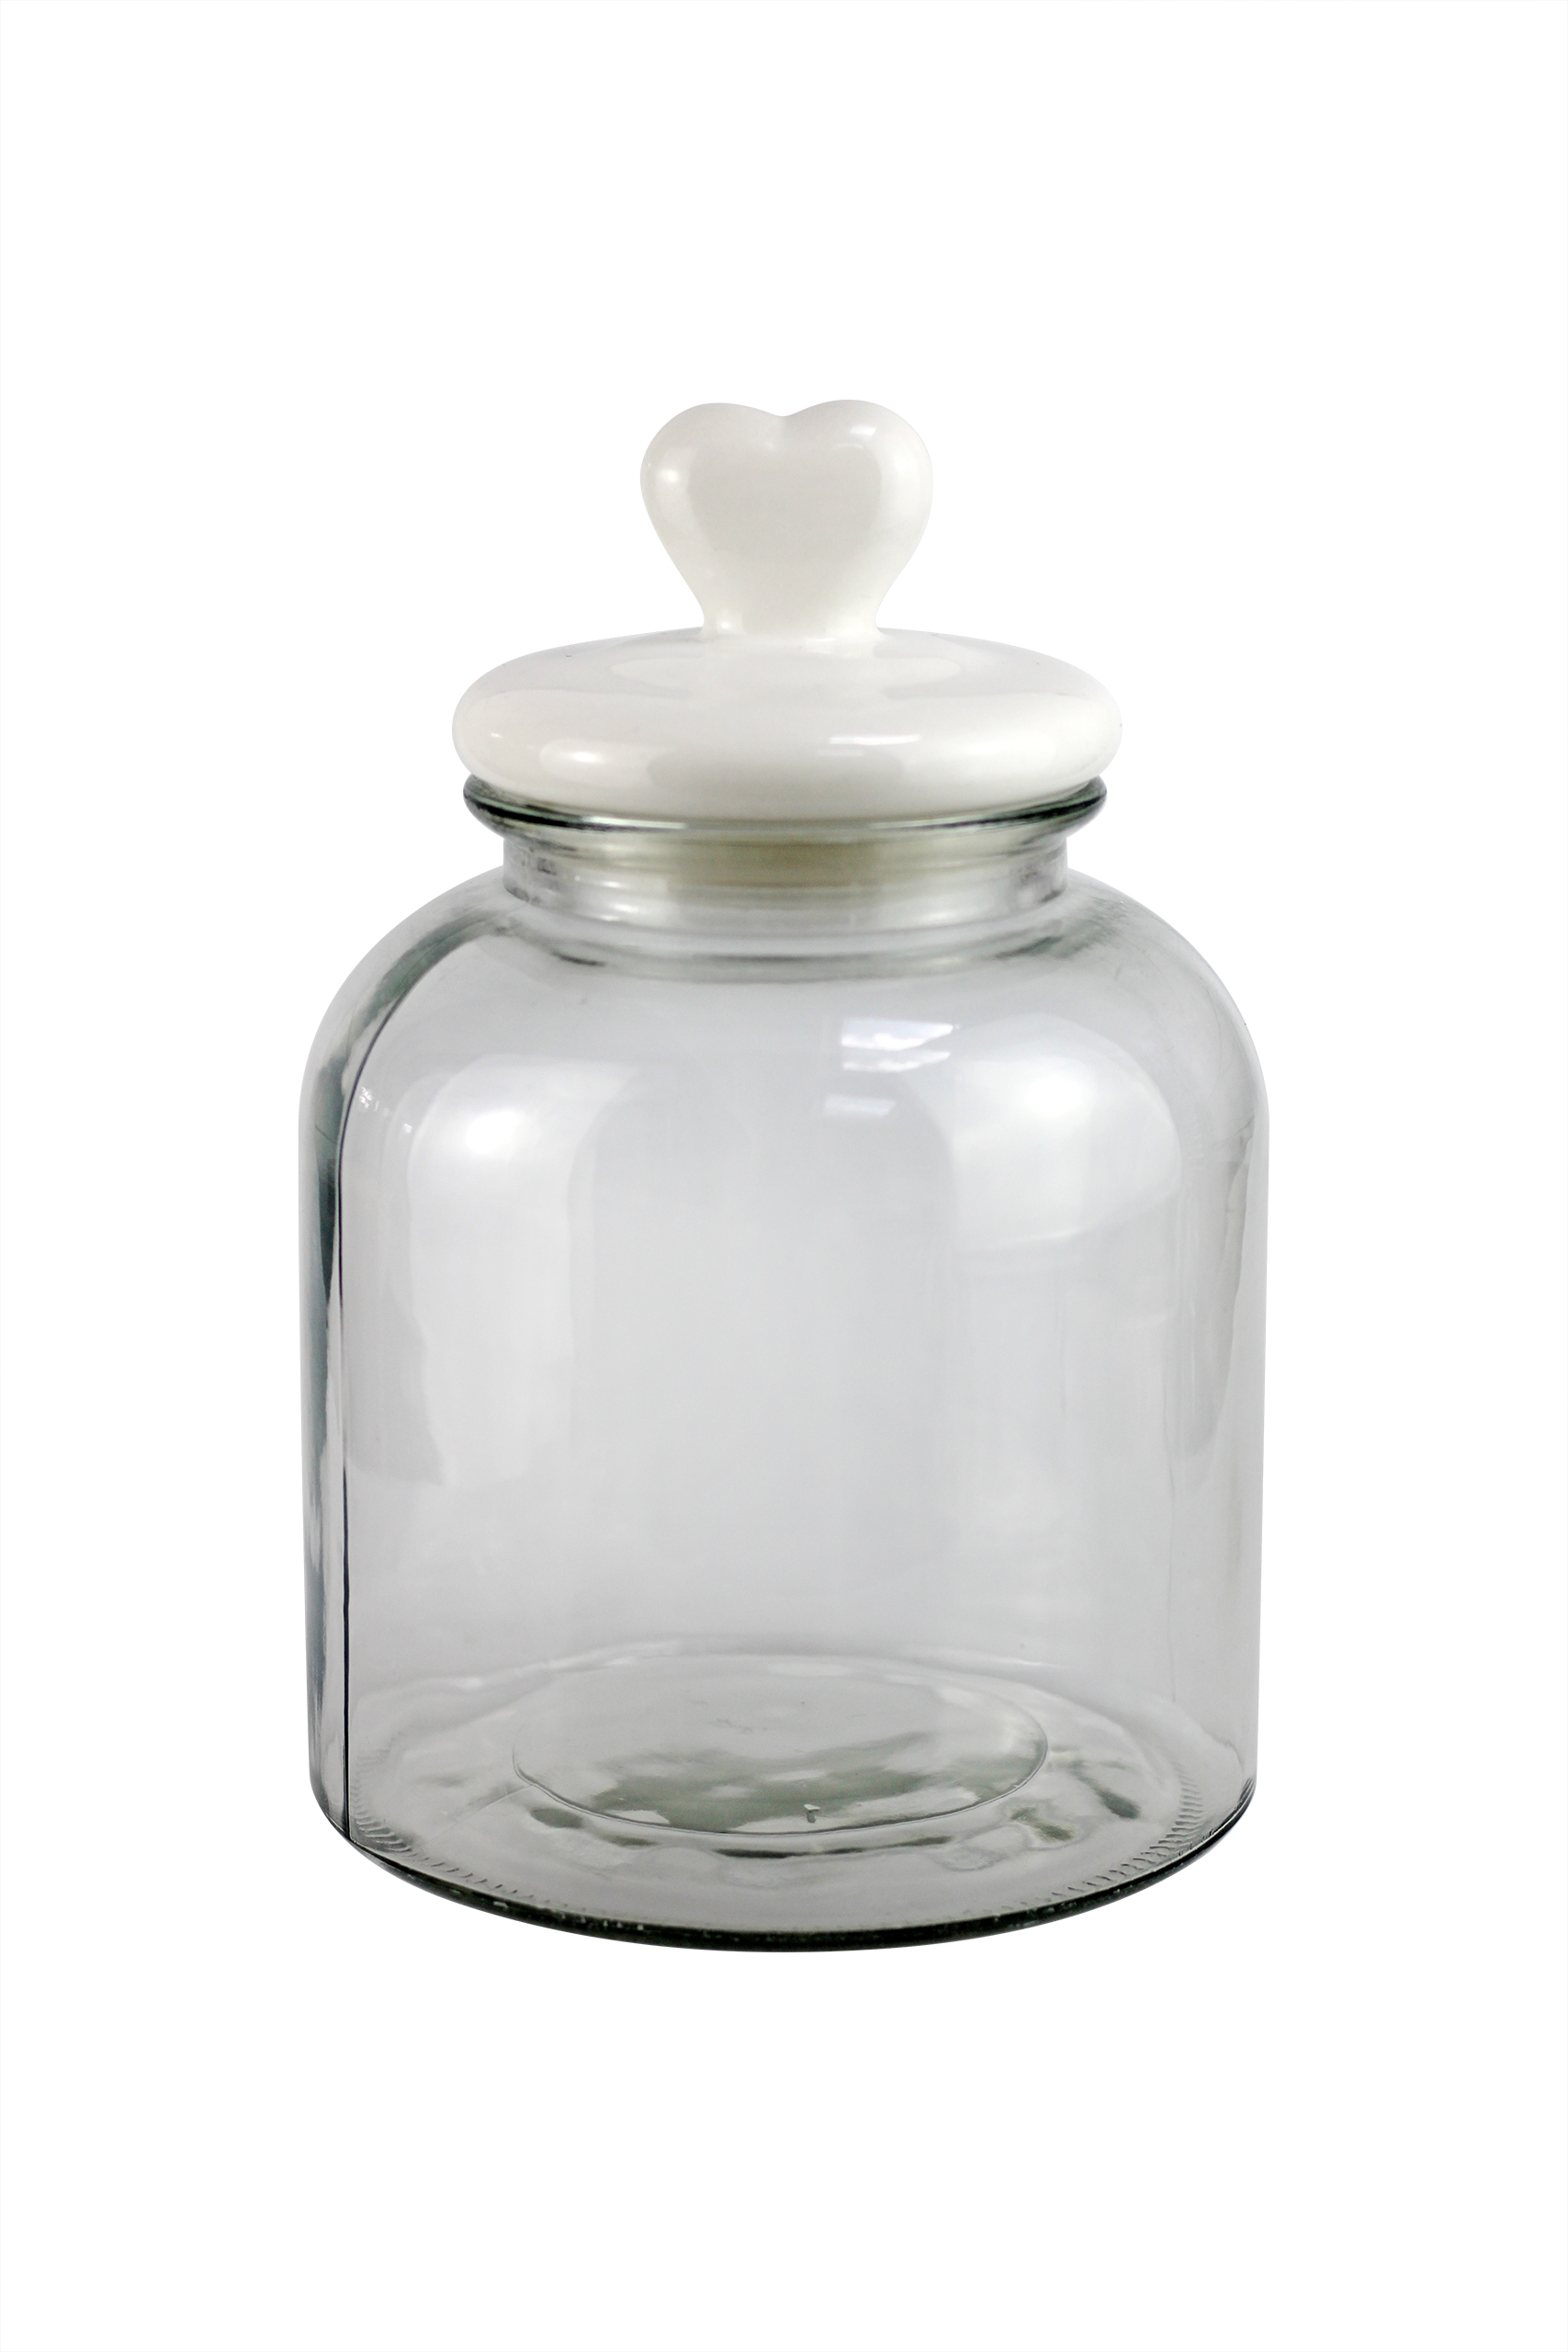 Glass Heart Jar Medium - Ceramic Lid | Pretty Little Home